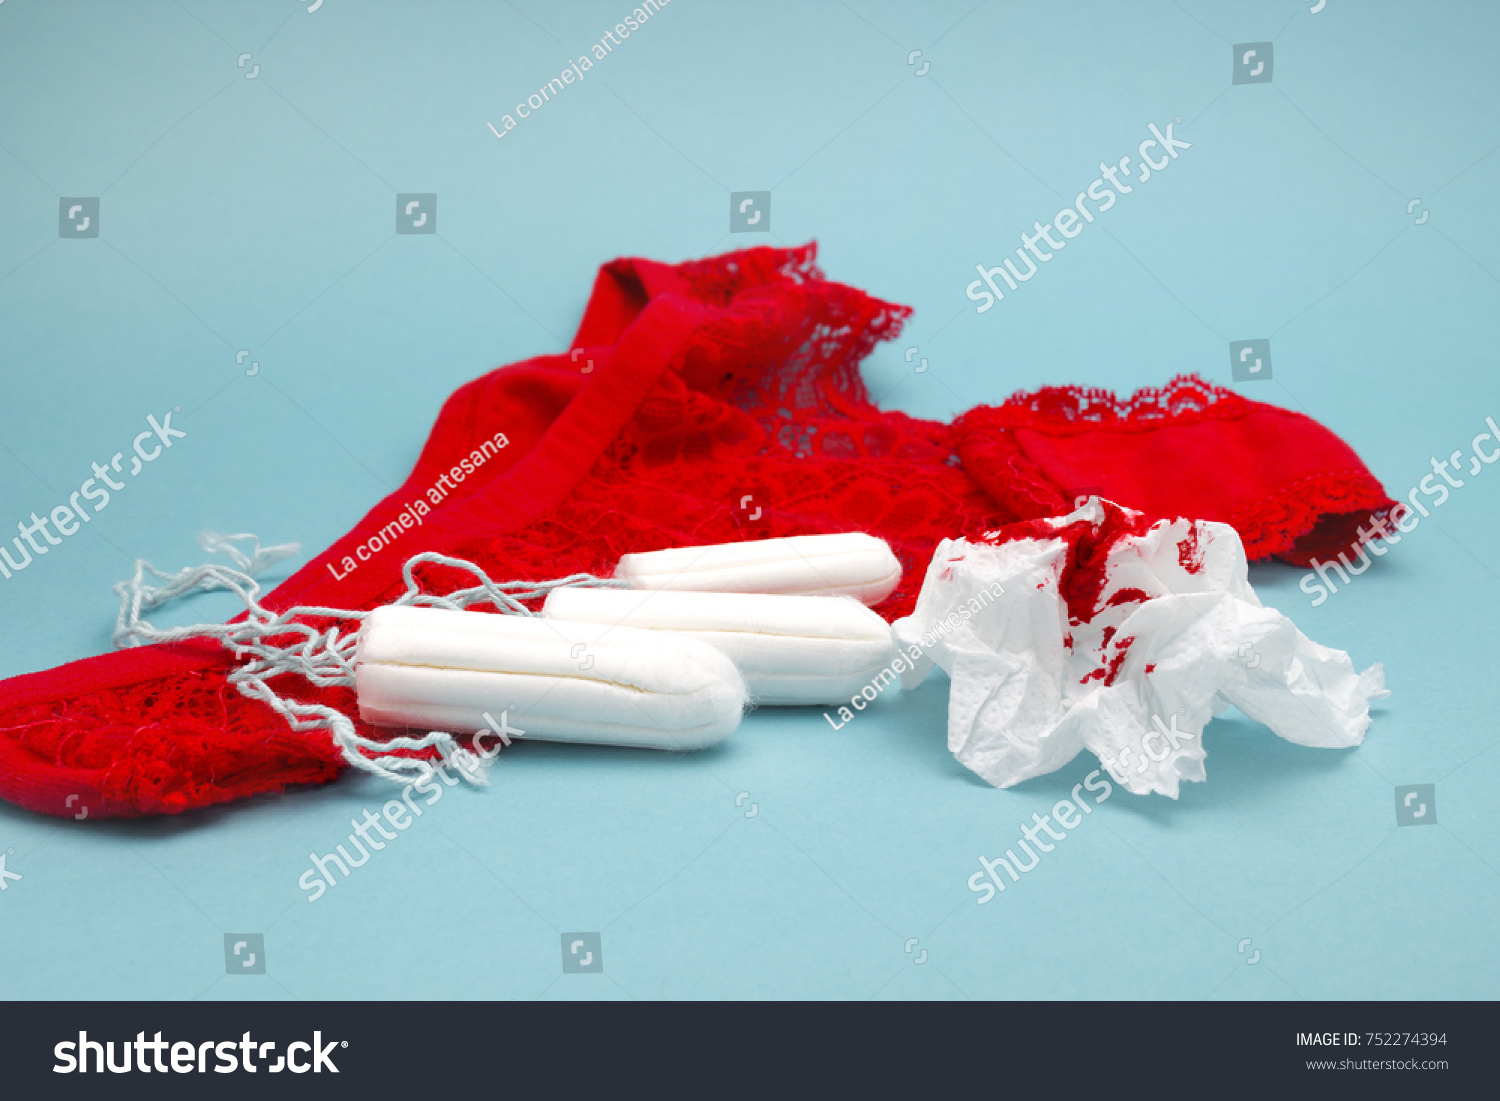 Red Lace Pants Menstruation Tampons Blood Stok Fotoğrafı 752274394 Shutters...